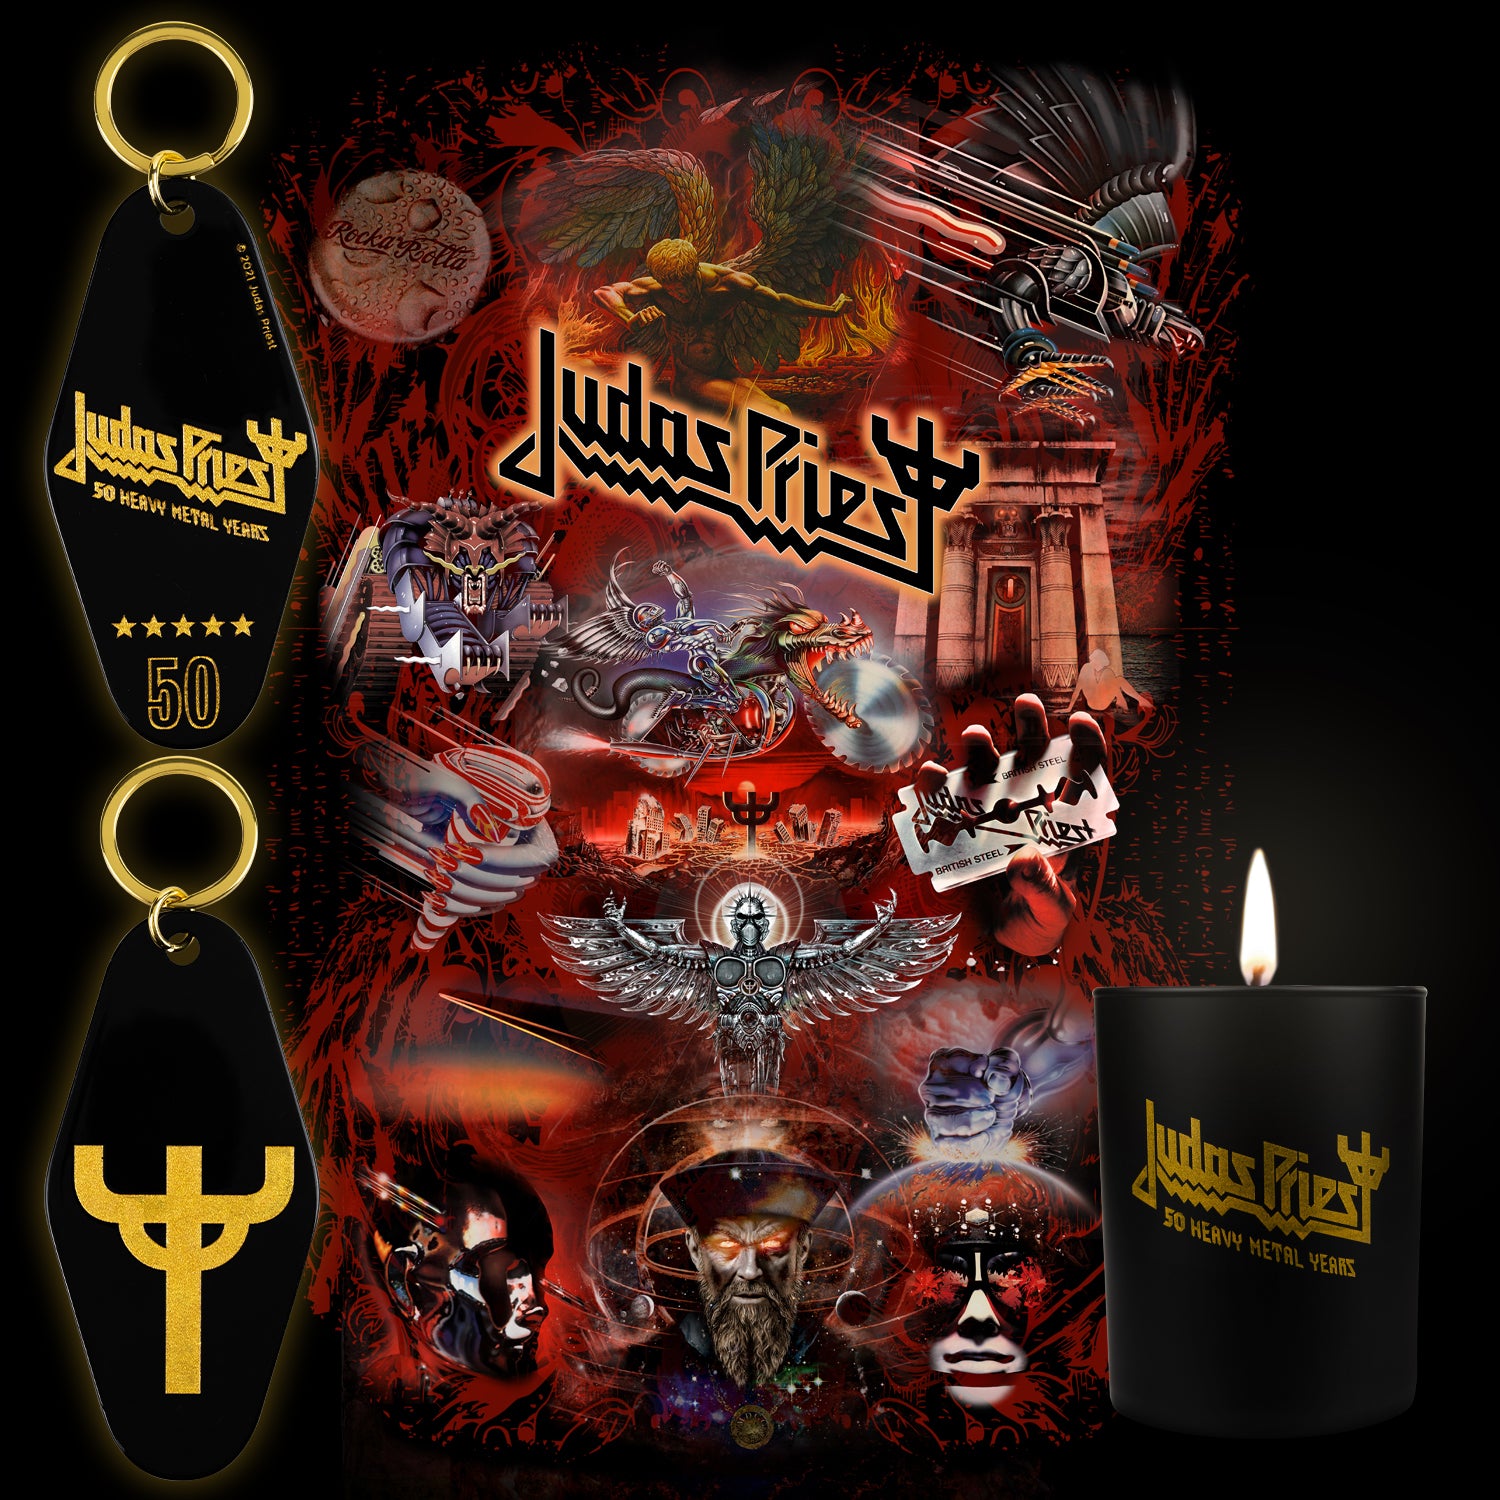 Judas Priest 50 Heavy Metal Years - Evoke Candle Co